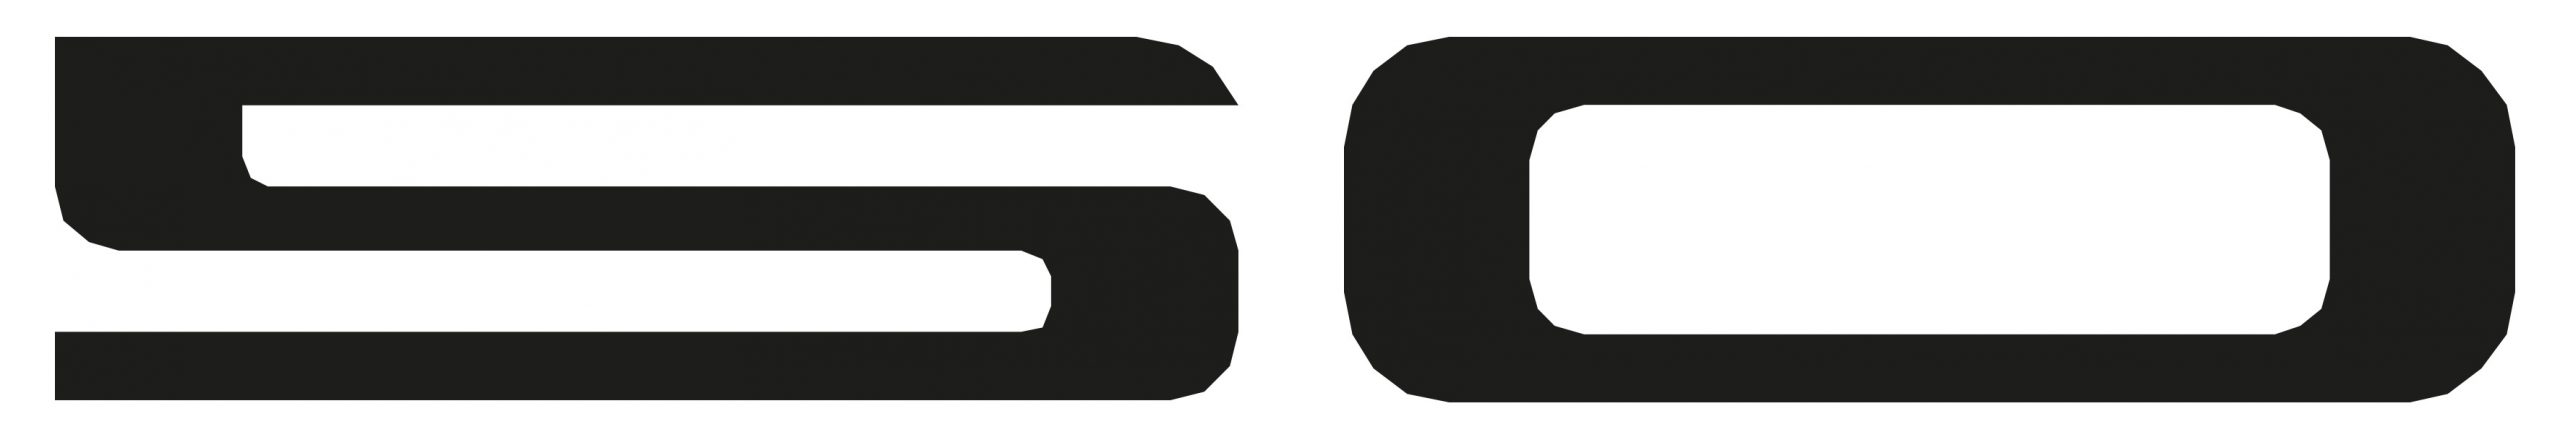 Squadron 50 - product logo